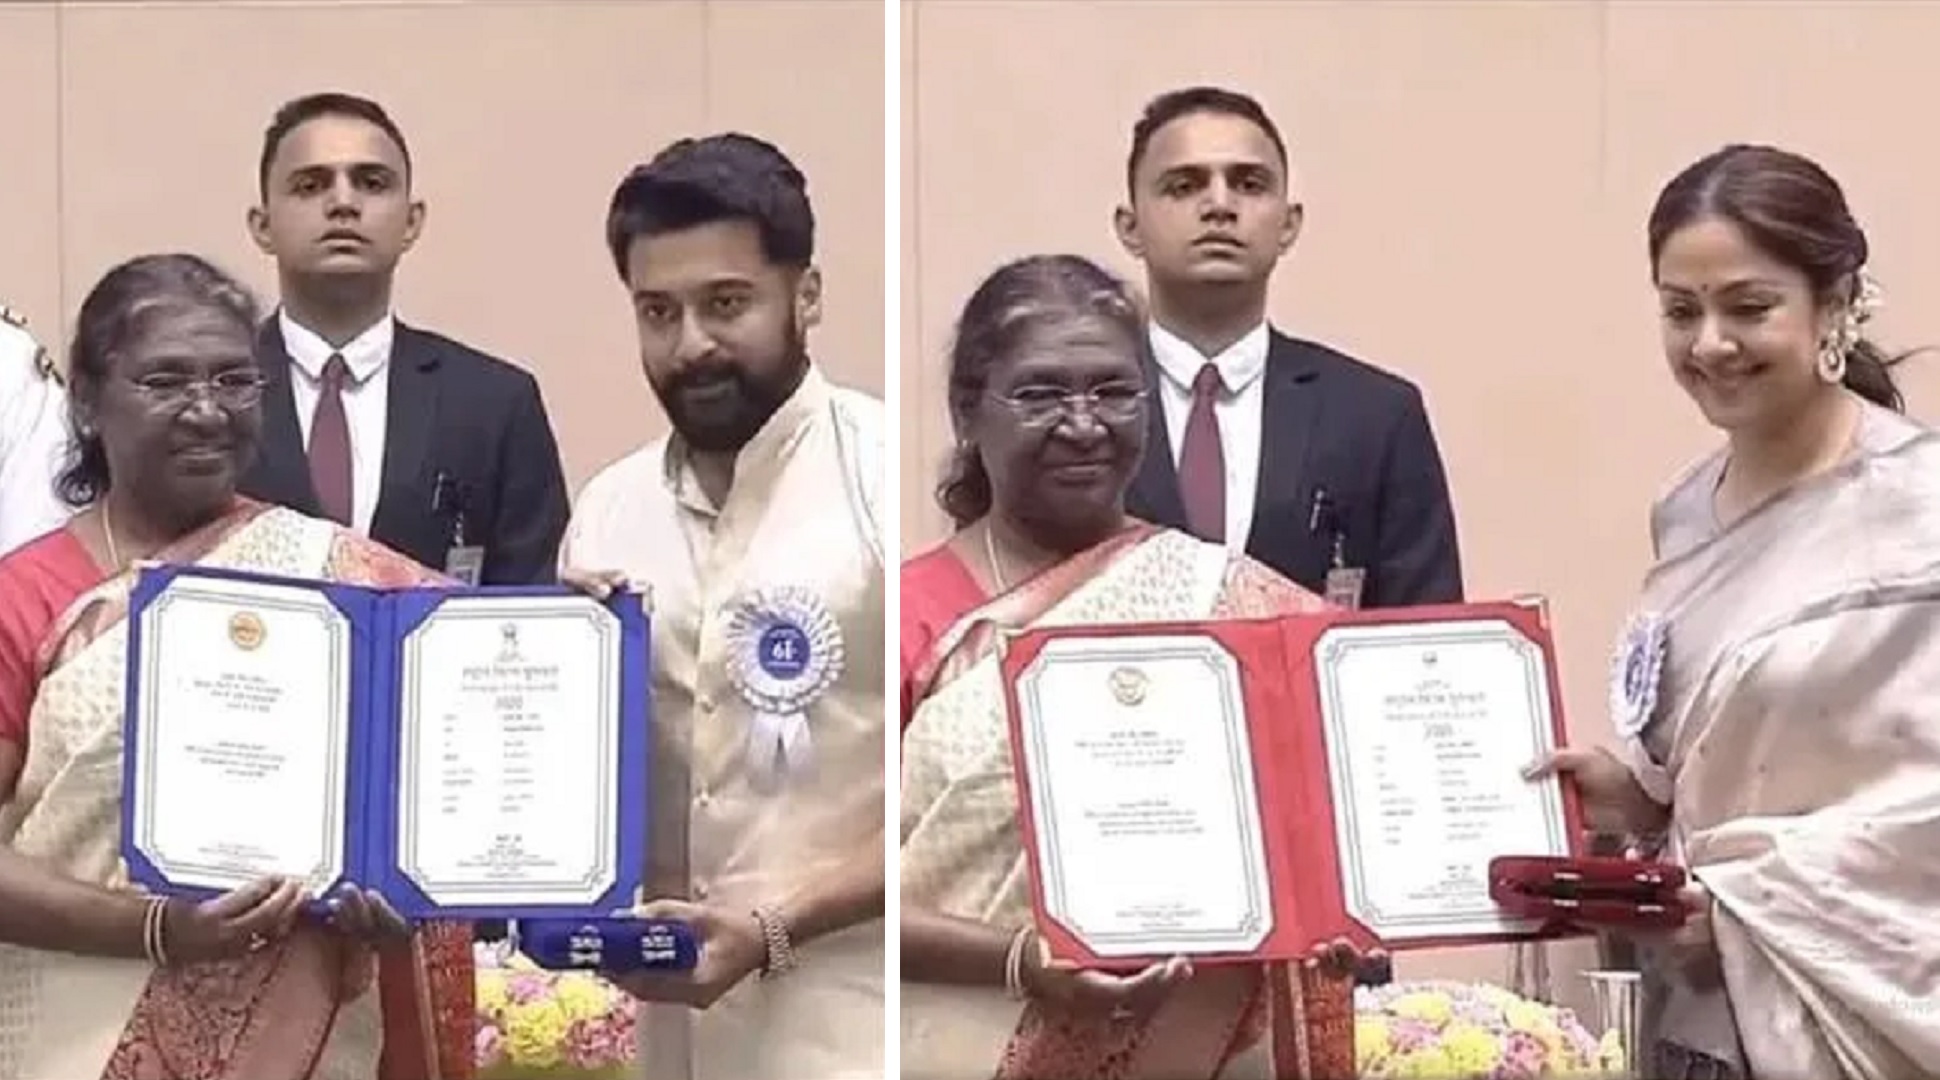 Power Couple : Suriya and wife Jyothika both won National awards in the same night